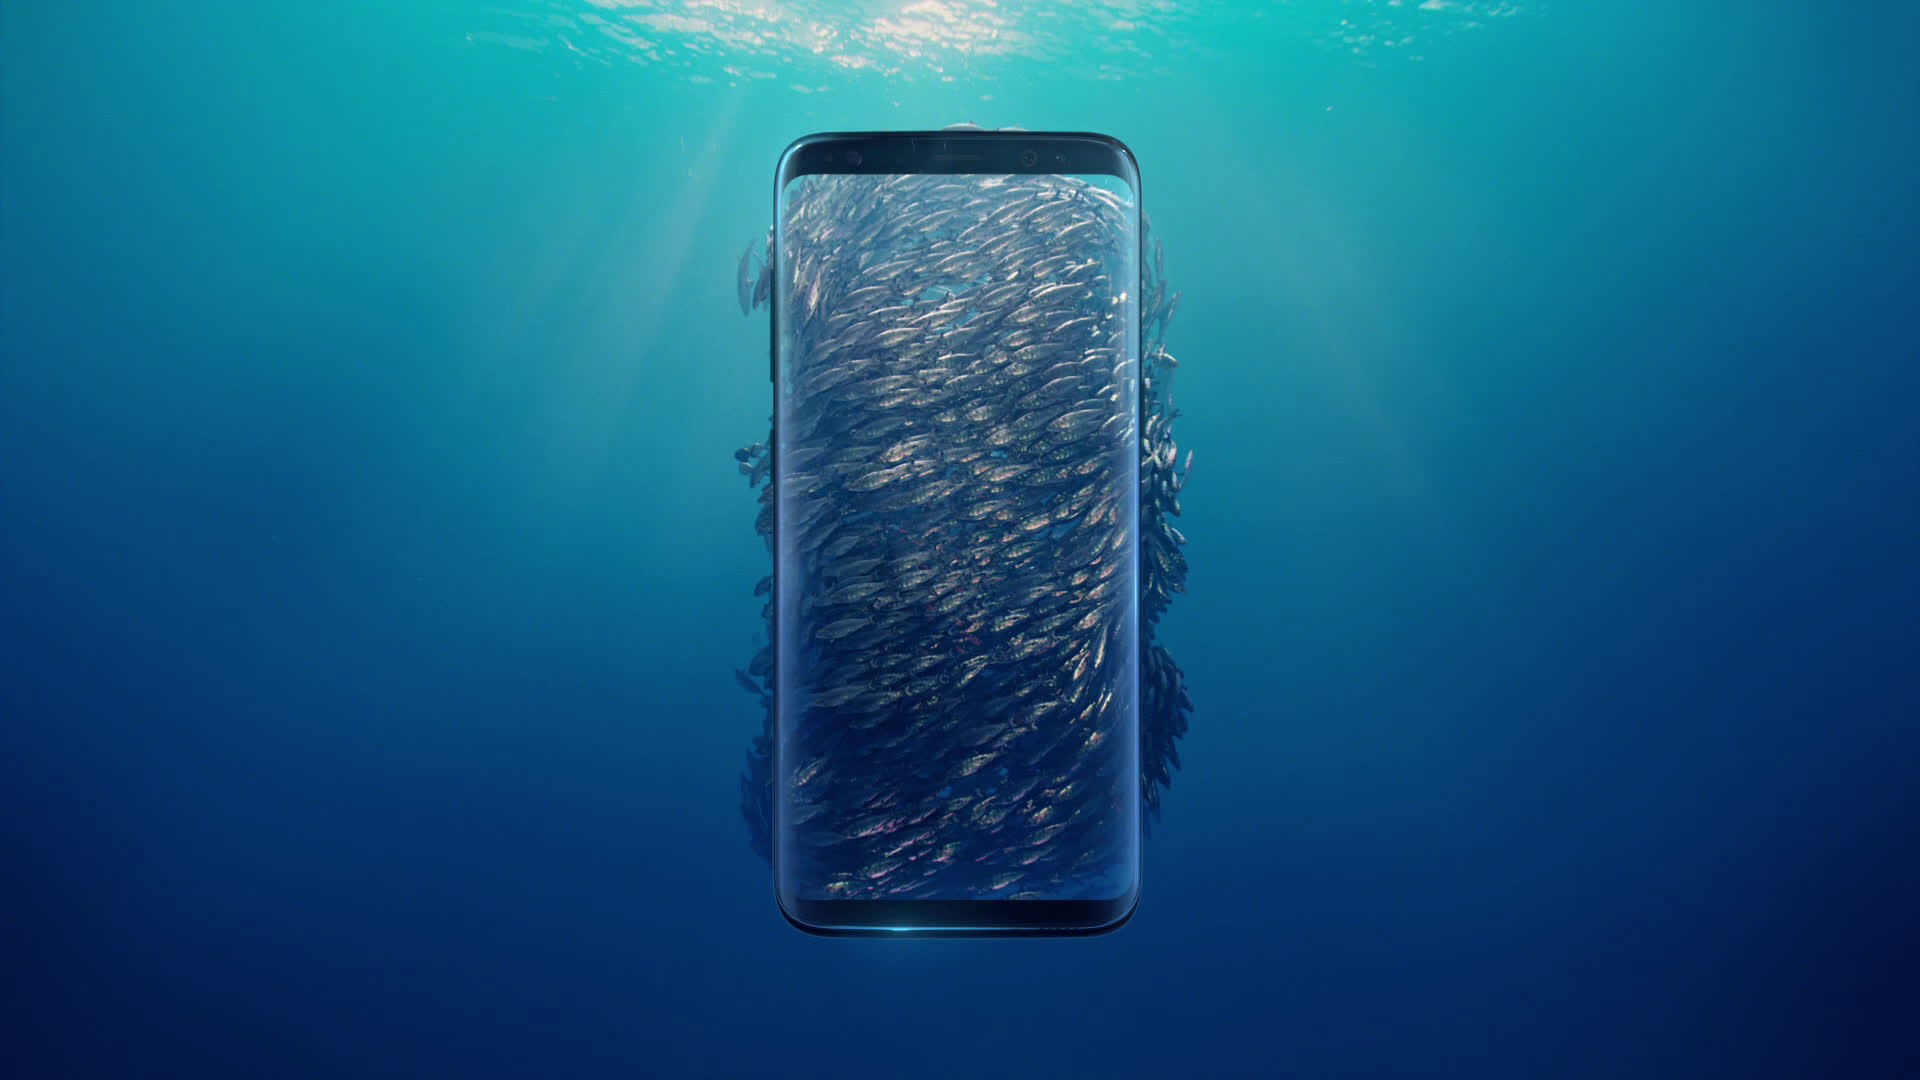 Samsung Galaxy S8: Launch Videos